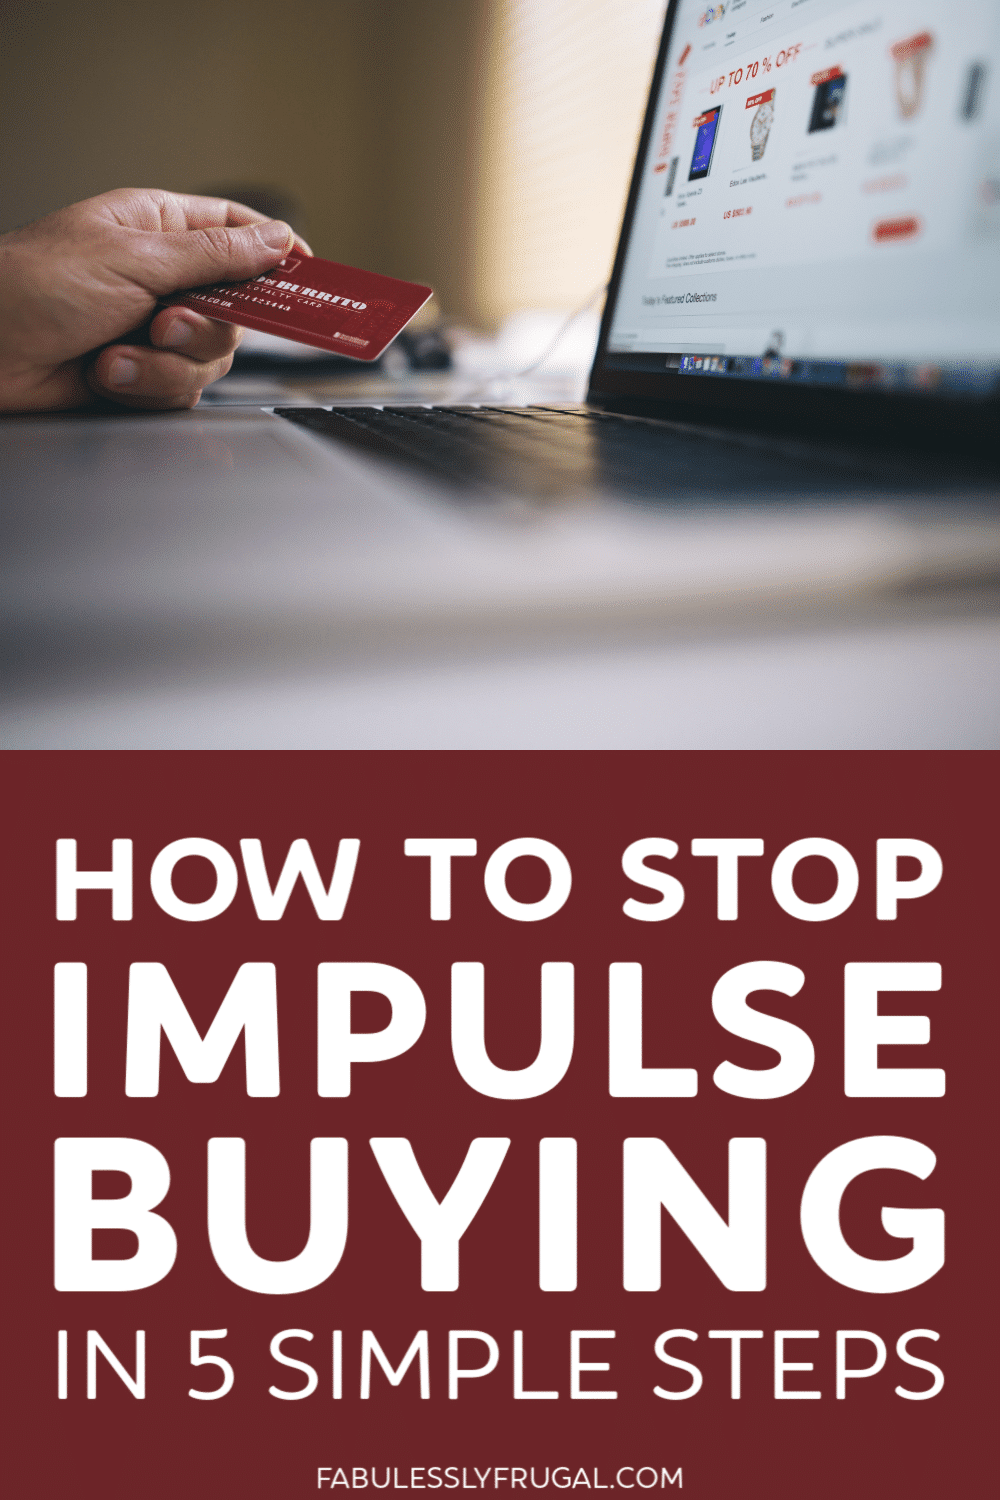 How to stop impulse buying